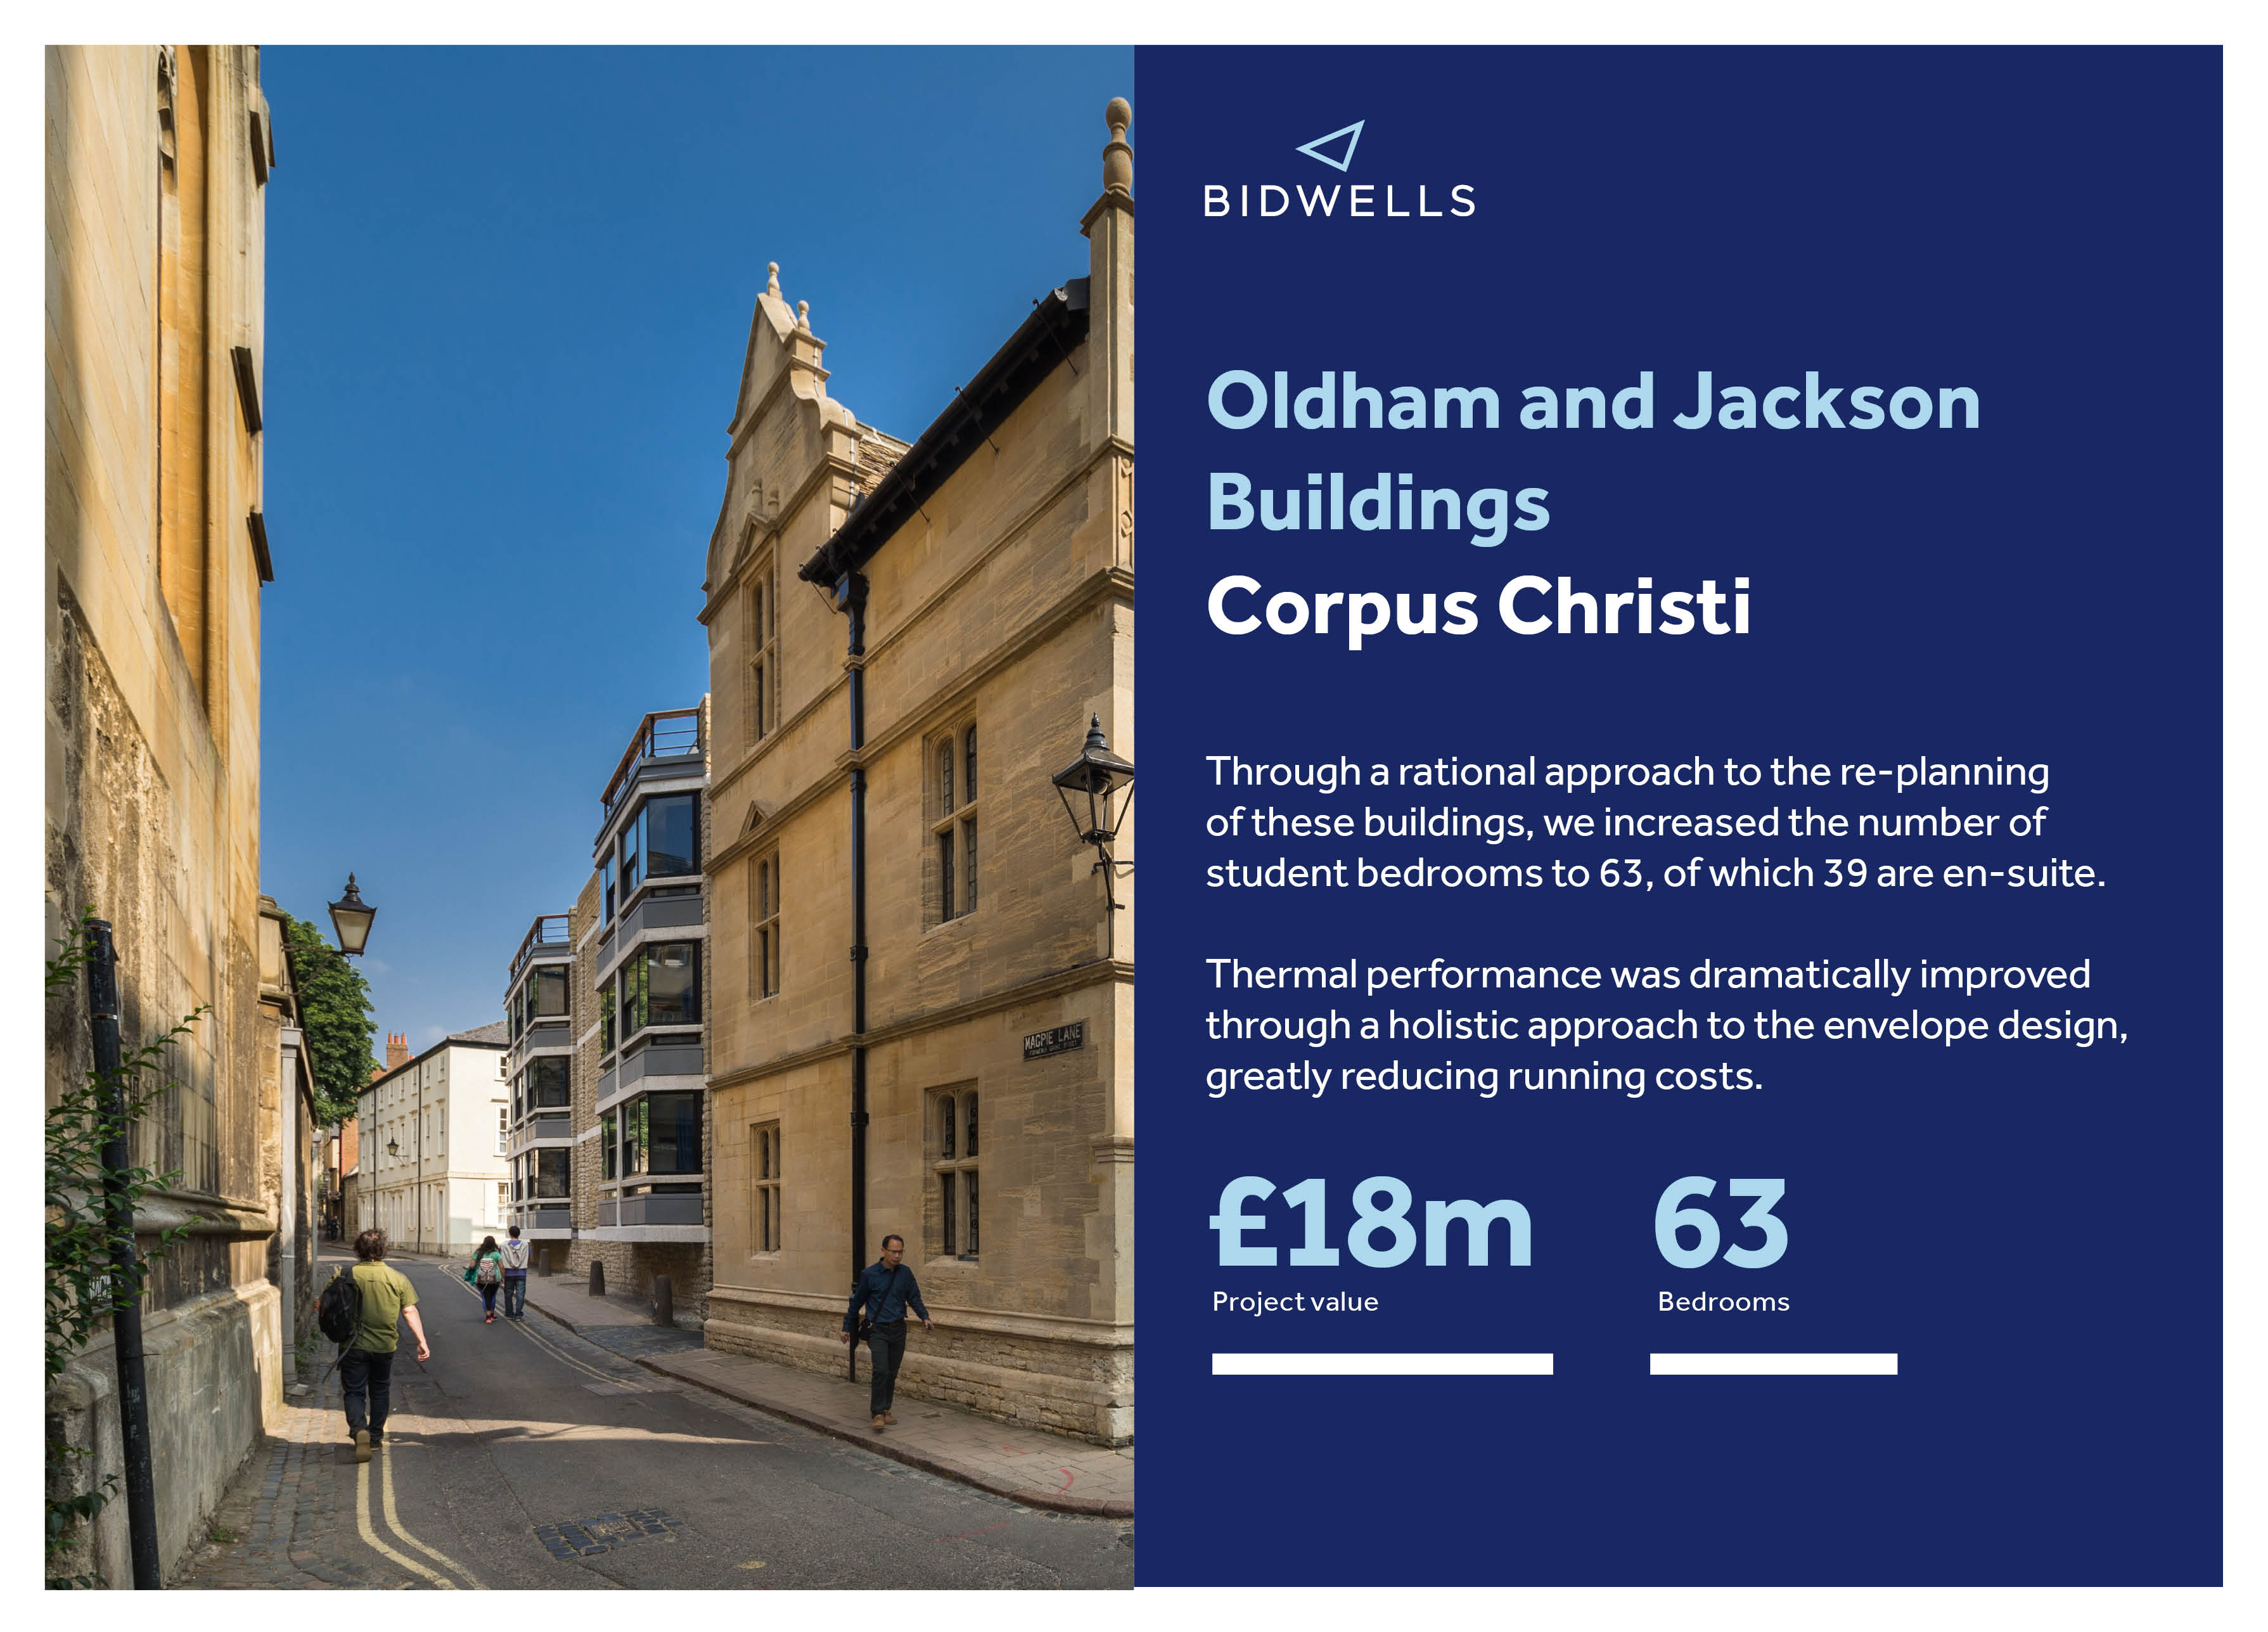 Coprus Christi - Jackson and Oldham Buildings